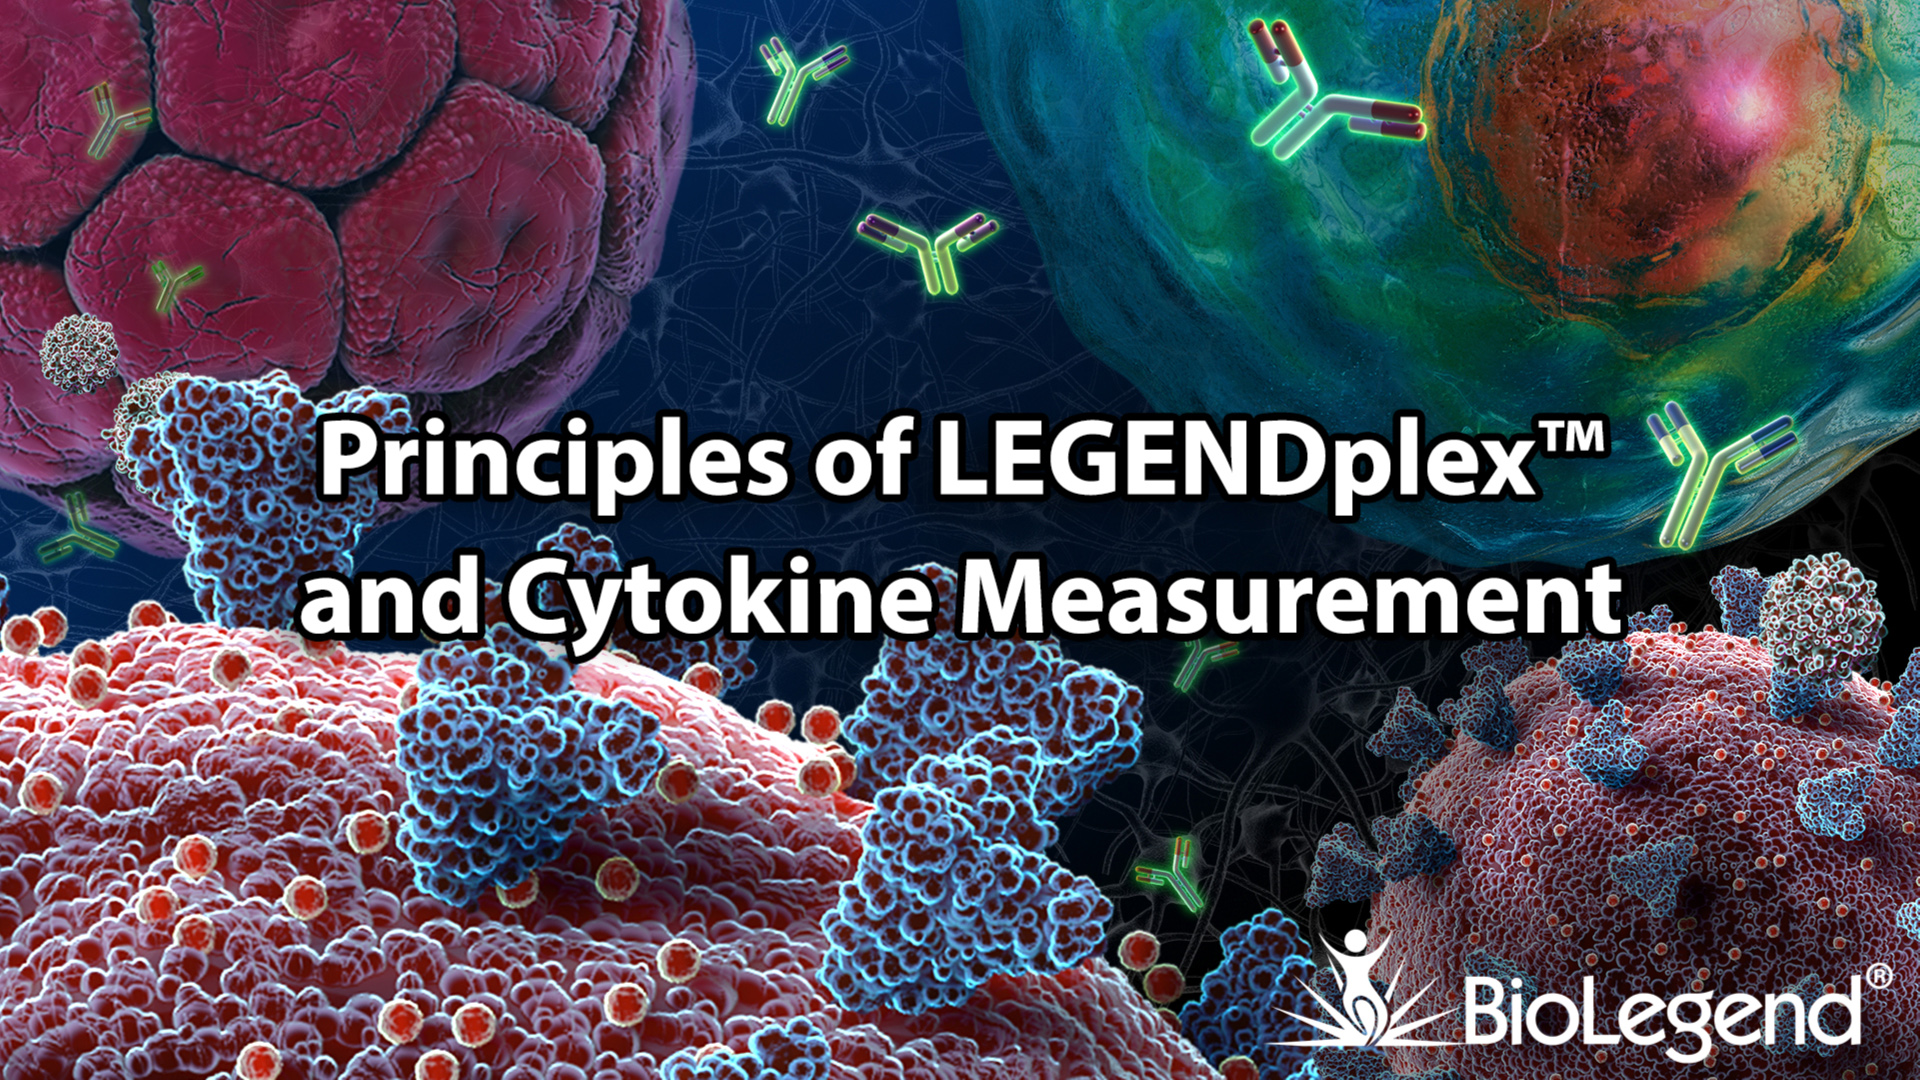 Principles of LEGENDplex and Cytokine Measurement